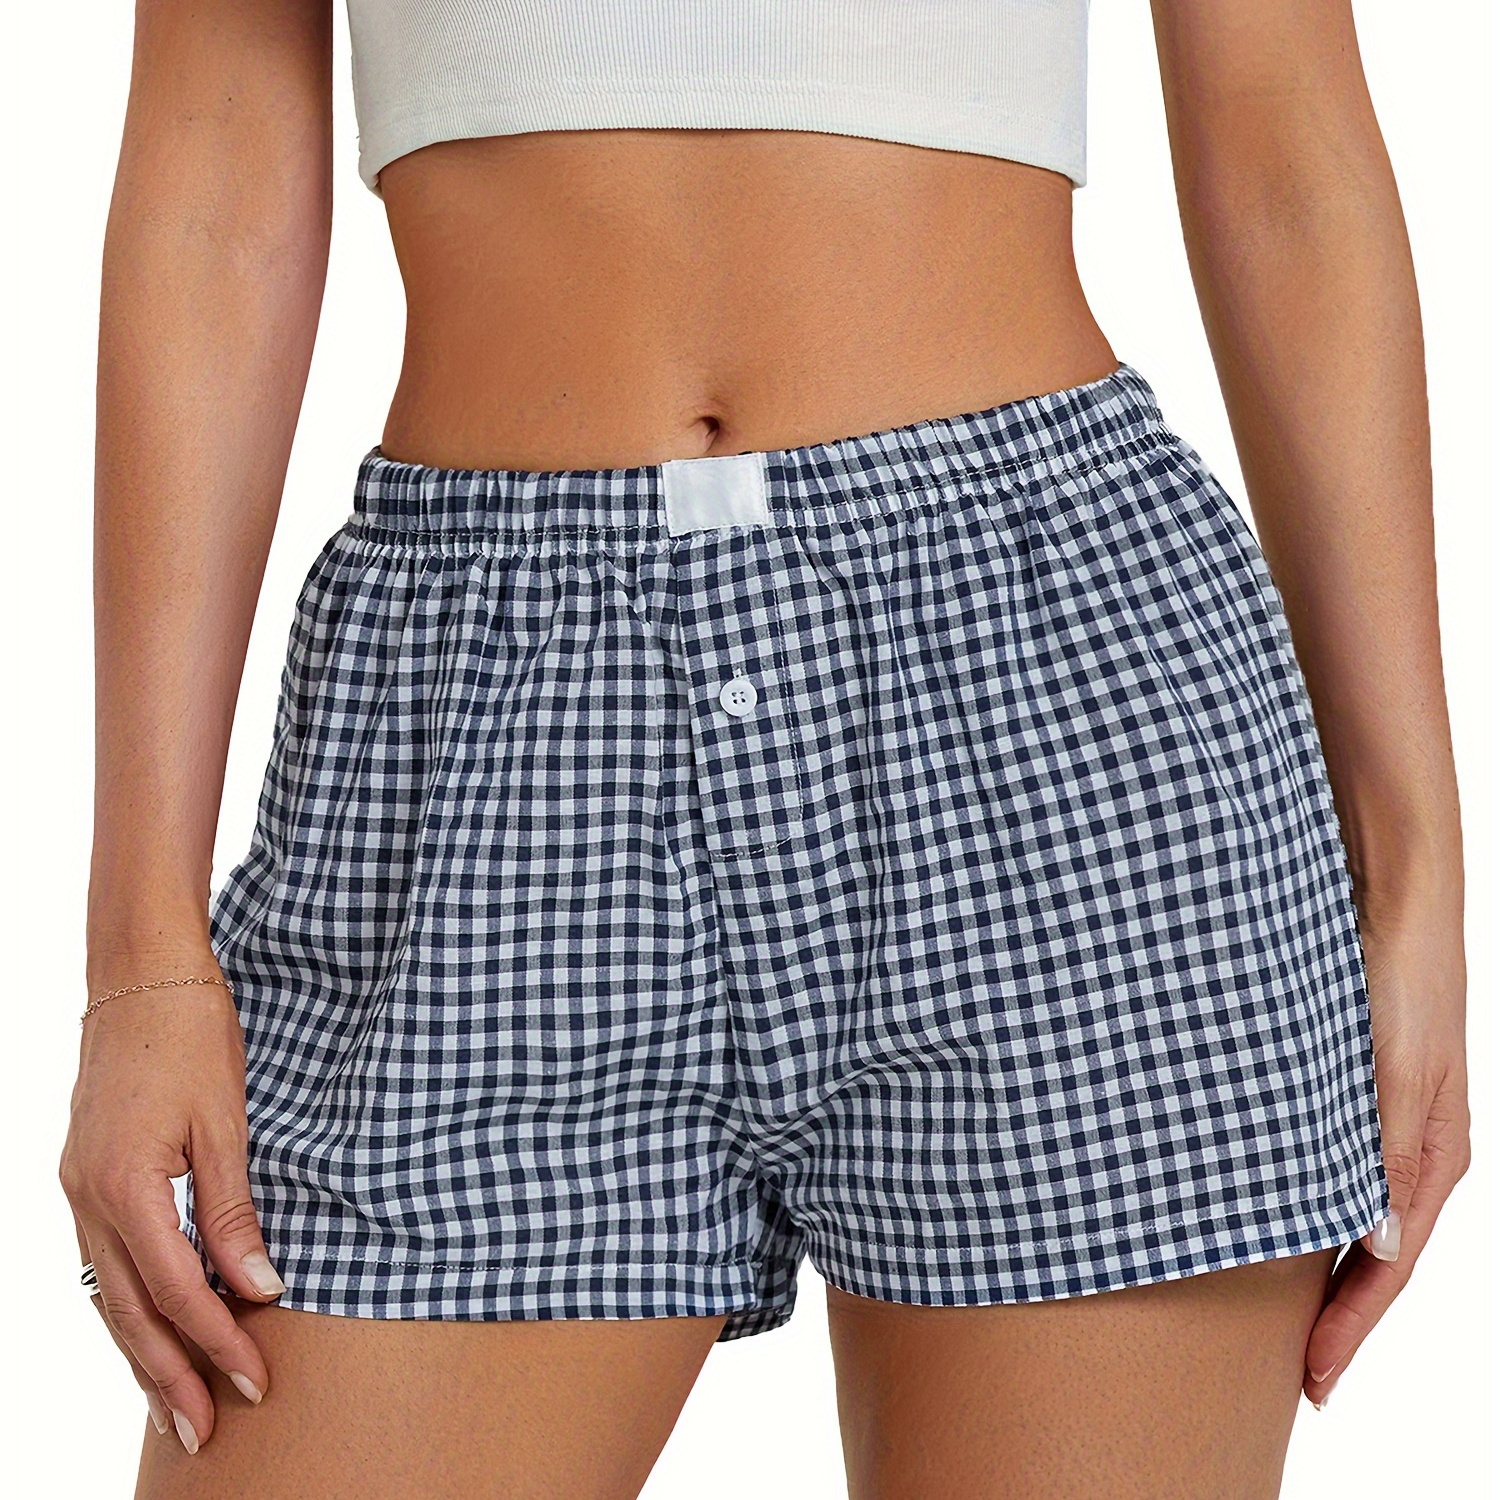 

Women's Y2k Lounge Gingham Pajamas Shorts Cute Elastic Waist Plaid Button Front Pj Bottoms Boxers Shorts Sleepwear